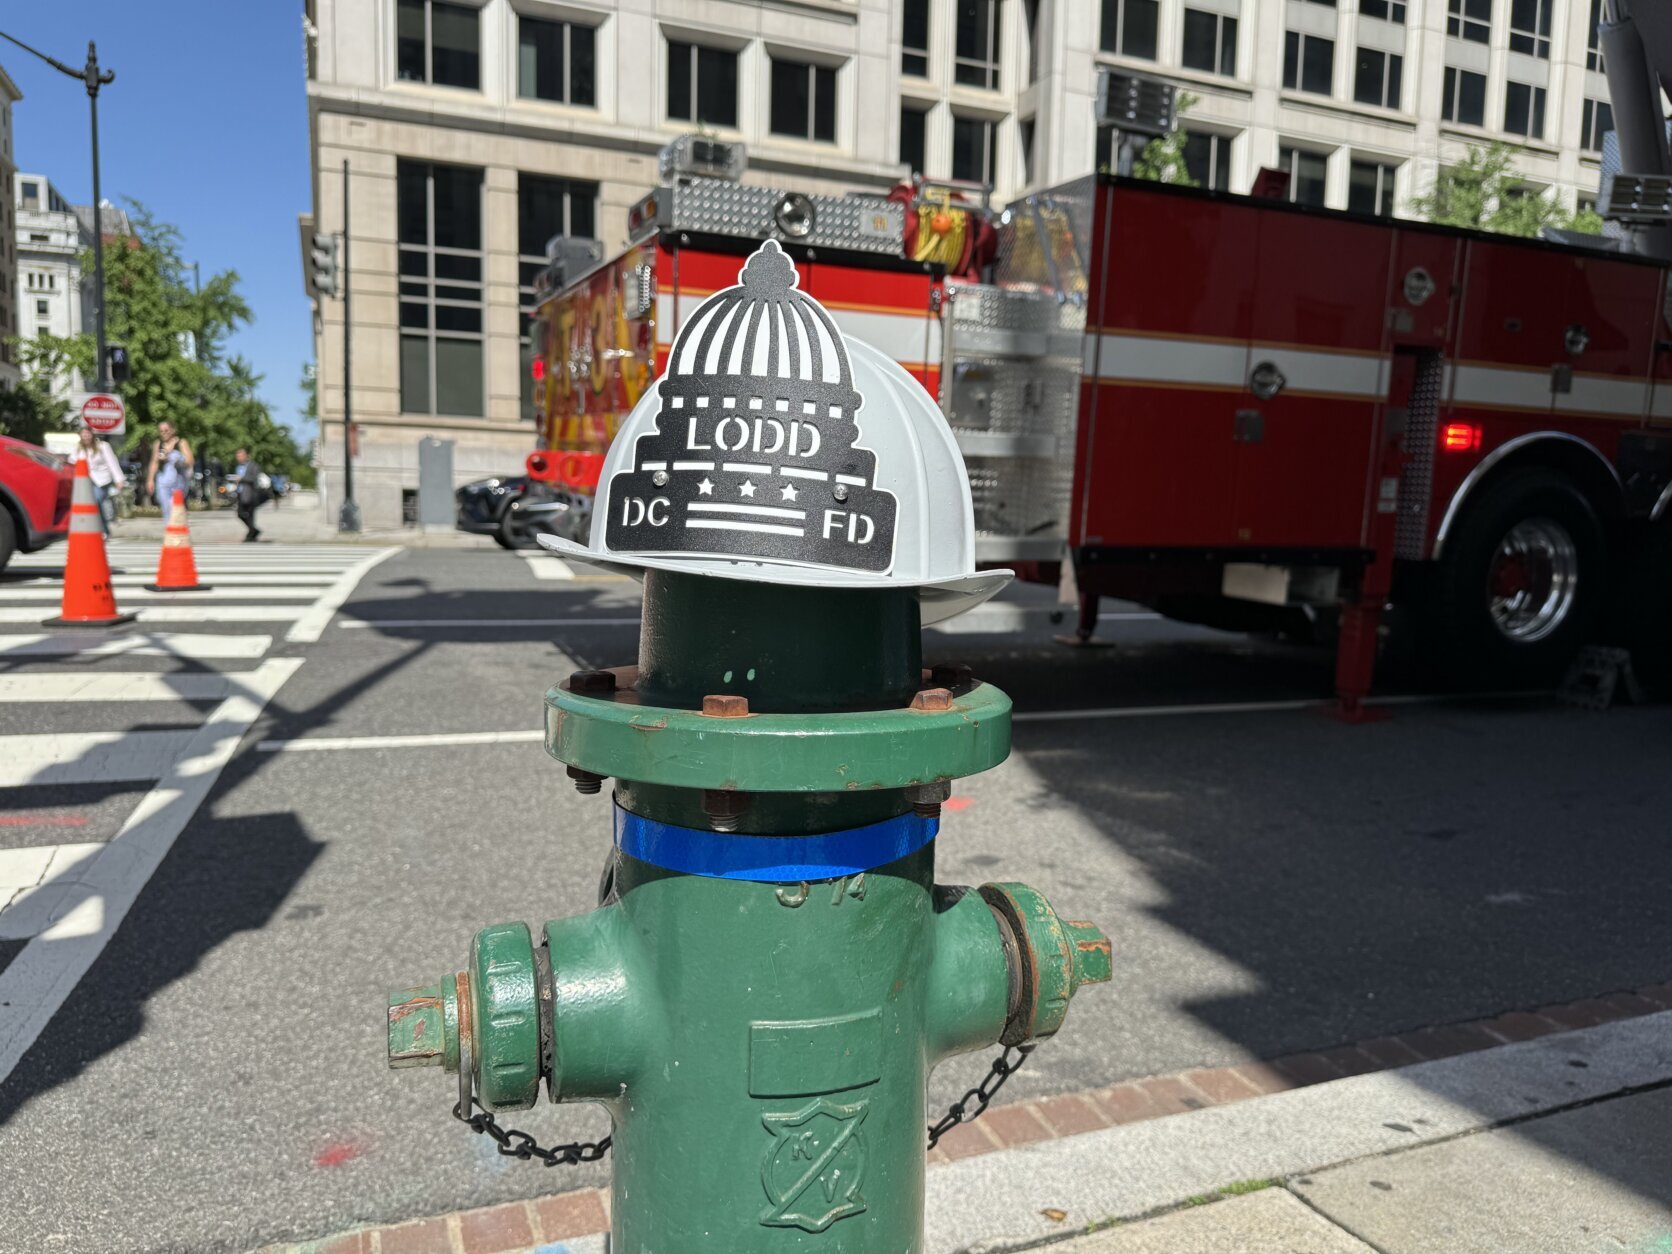 Capacete dos bombeiros no hidrante